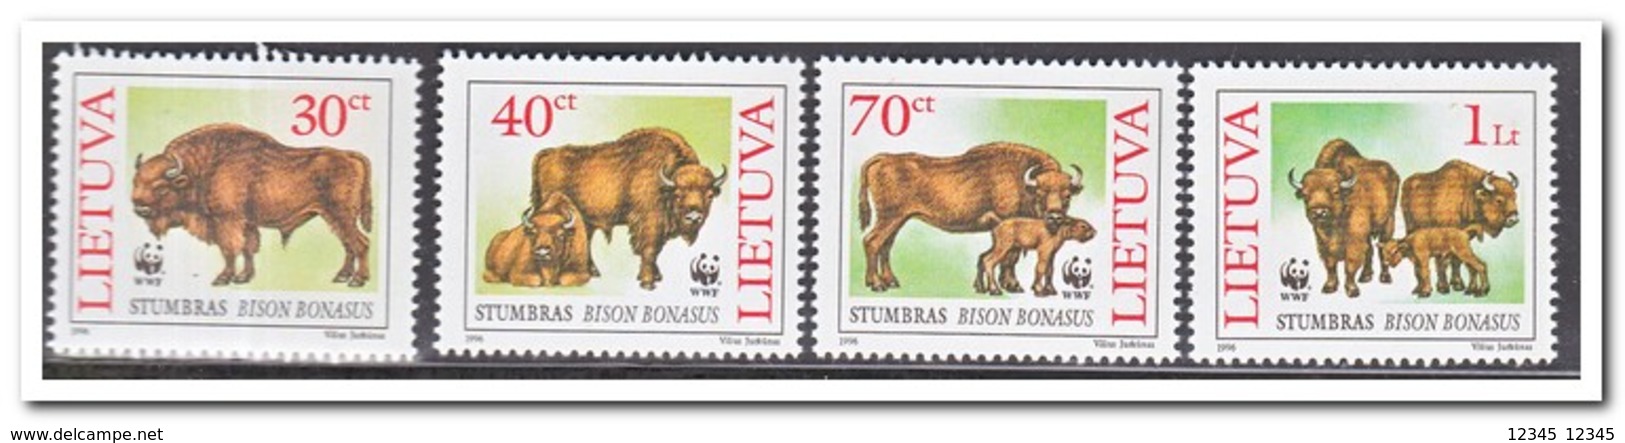 Litouwen 1996, Postfris MNH, Animals, WWF - Litouwen